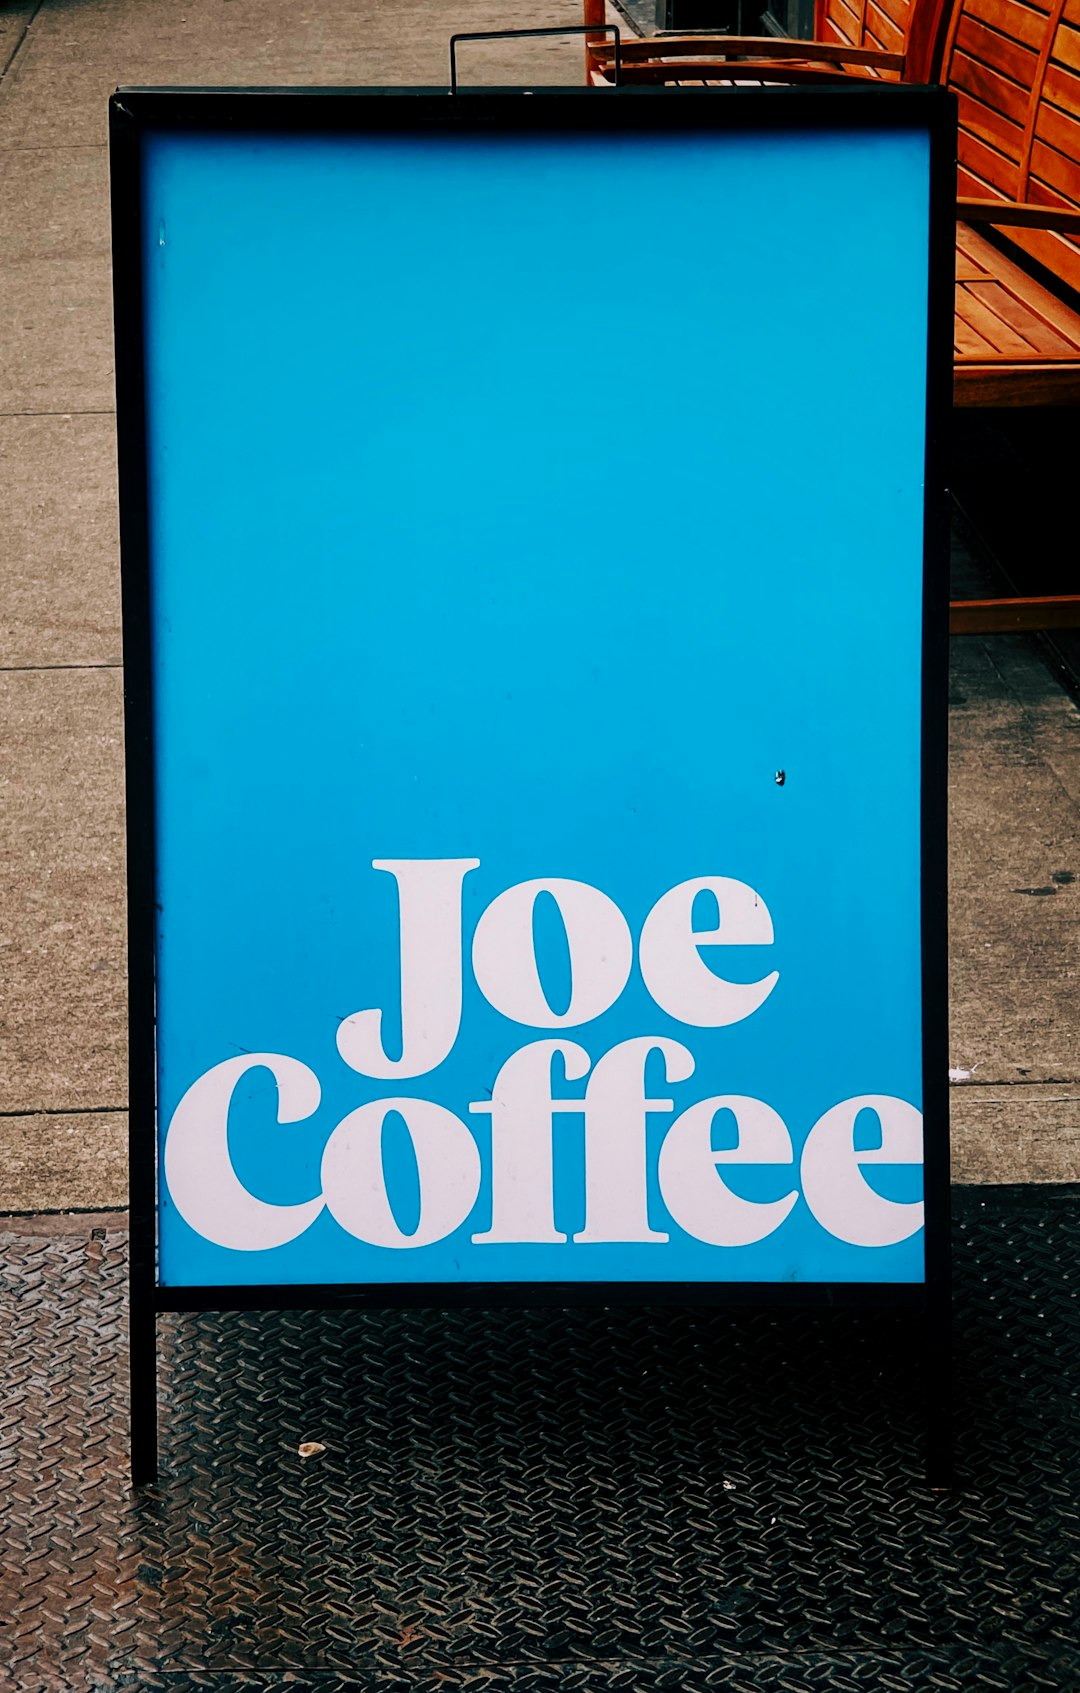 Joe Coffee signage